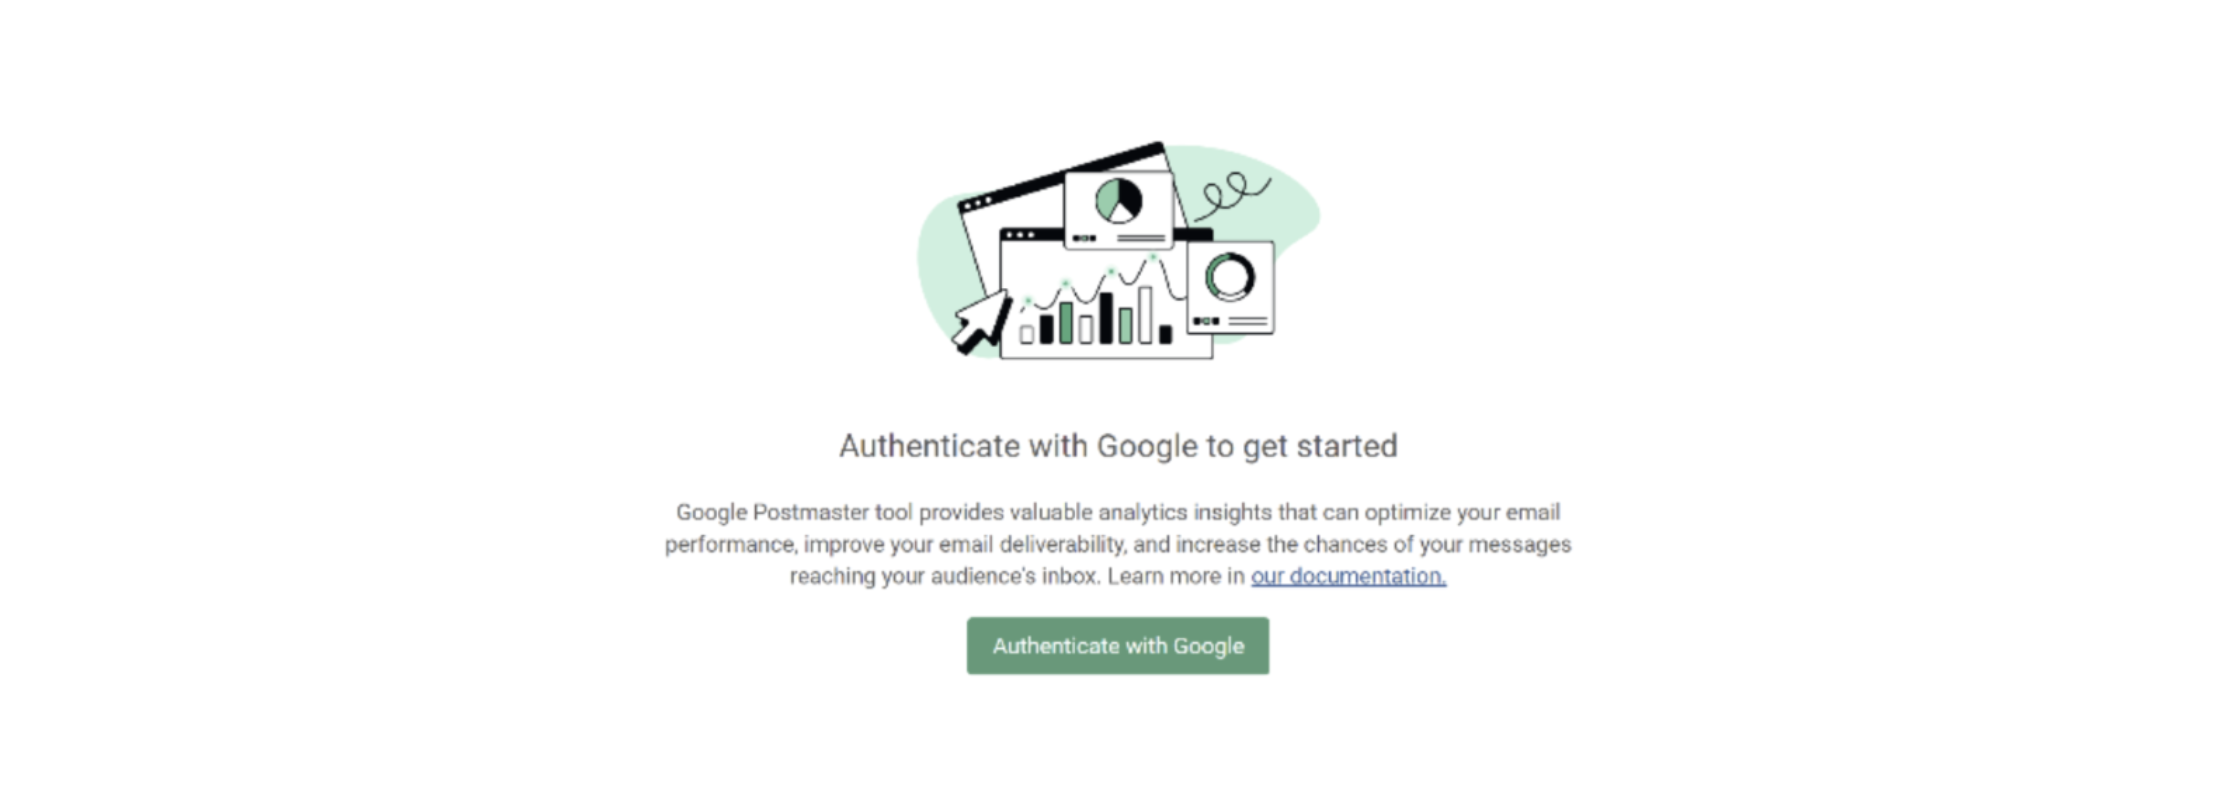 Google Postmaster tool authentication on Mailgun Optimize